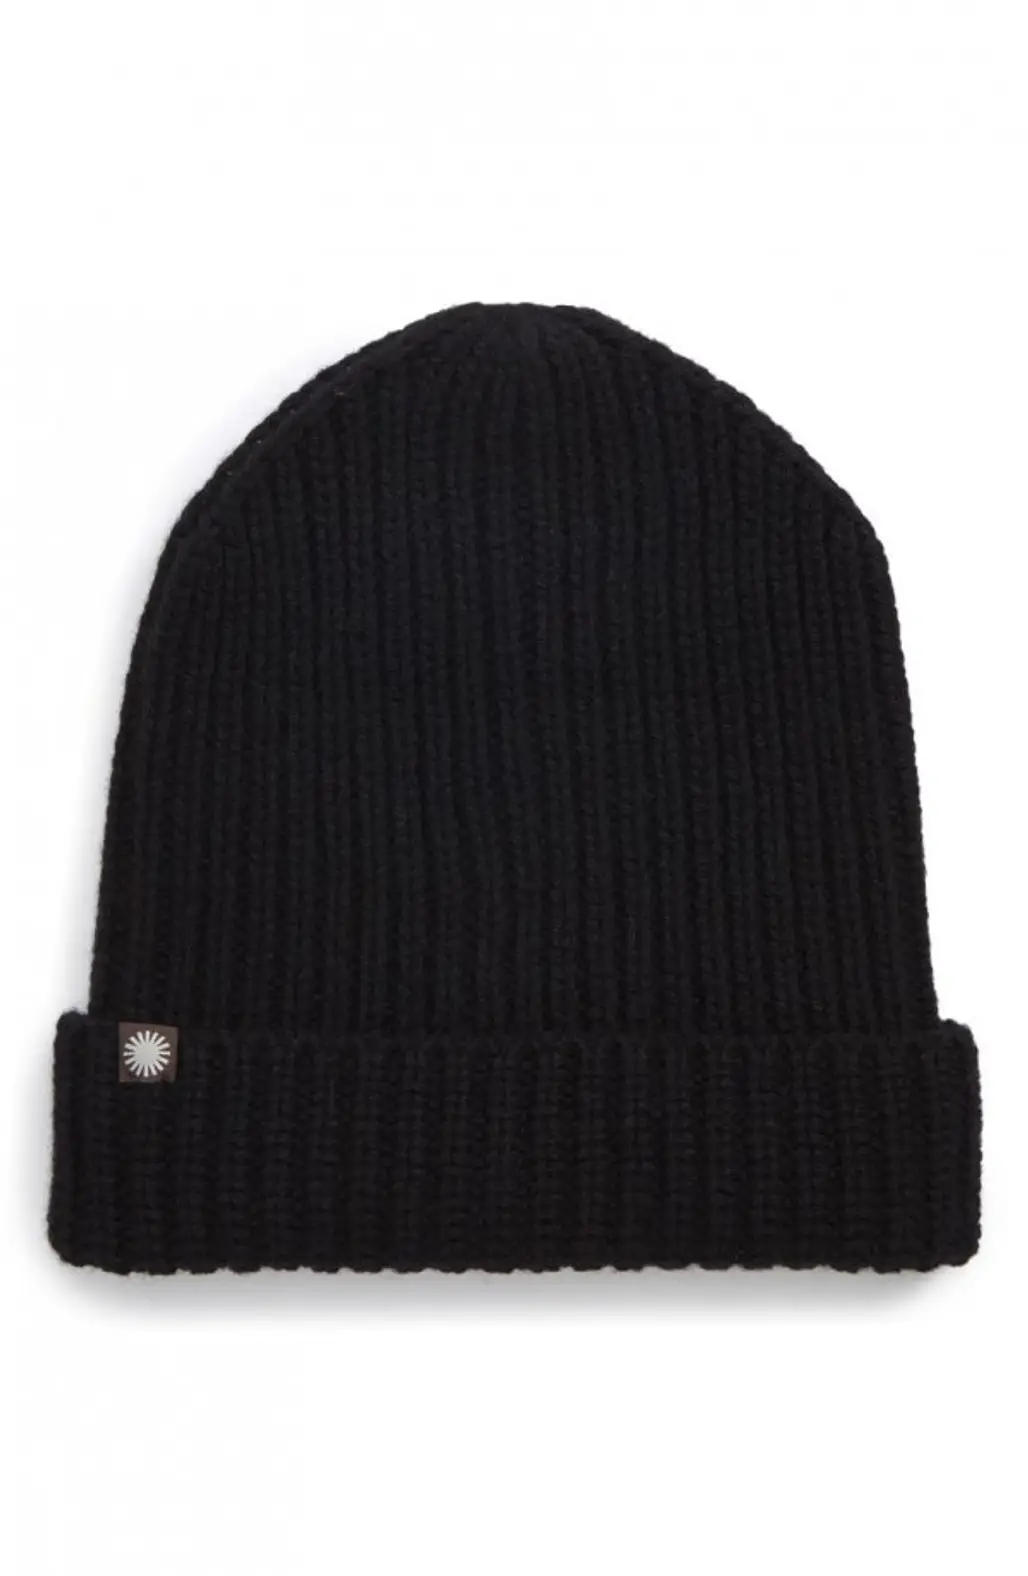 black, headgear, cap, woolen, beanie,